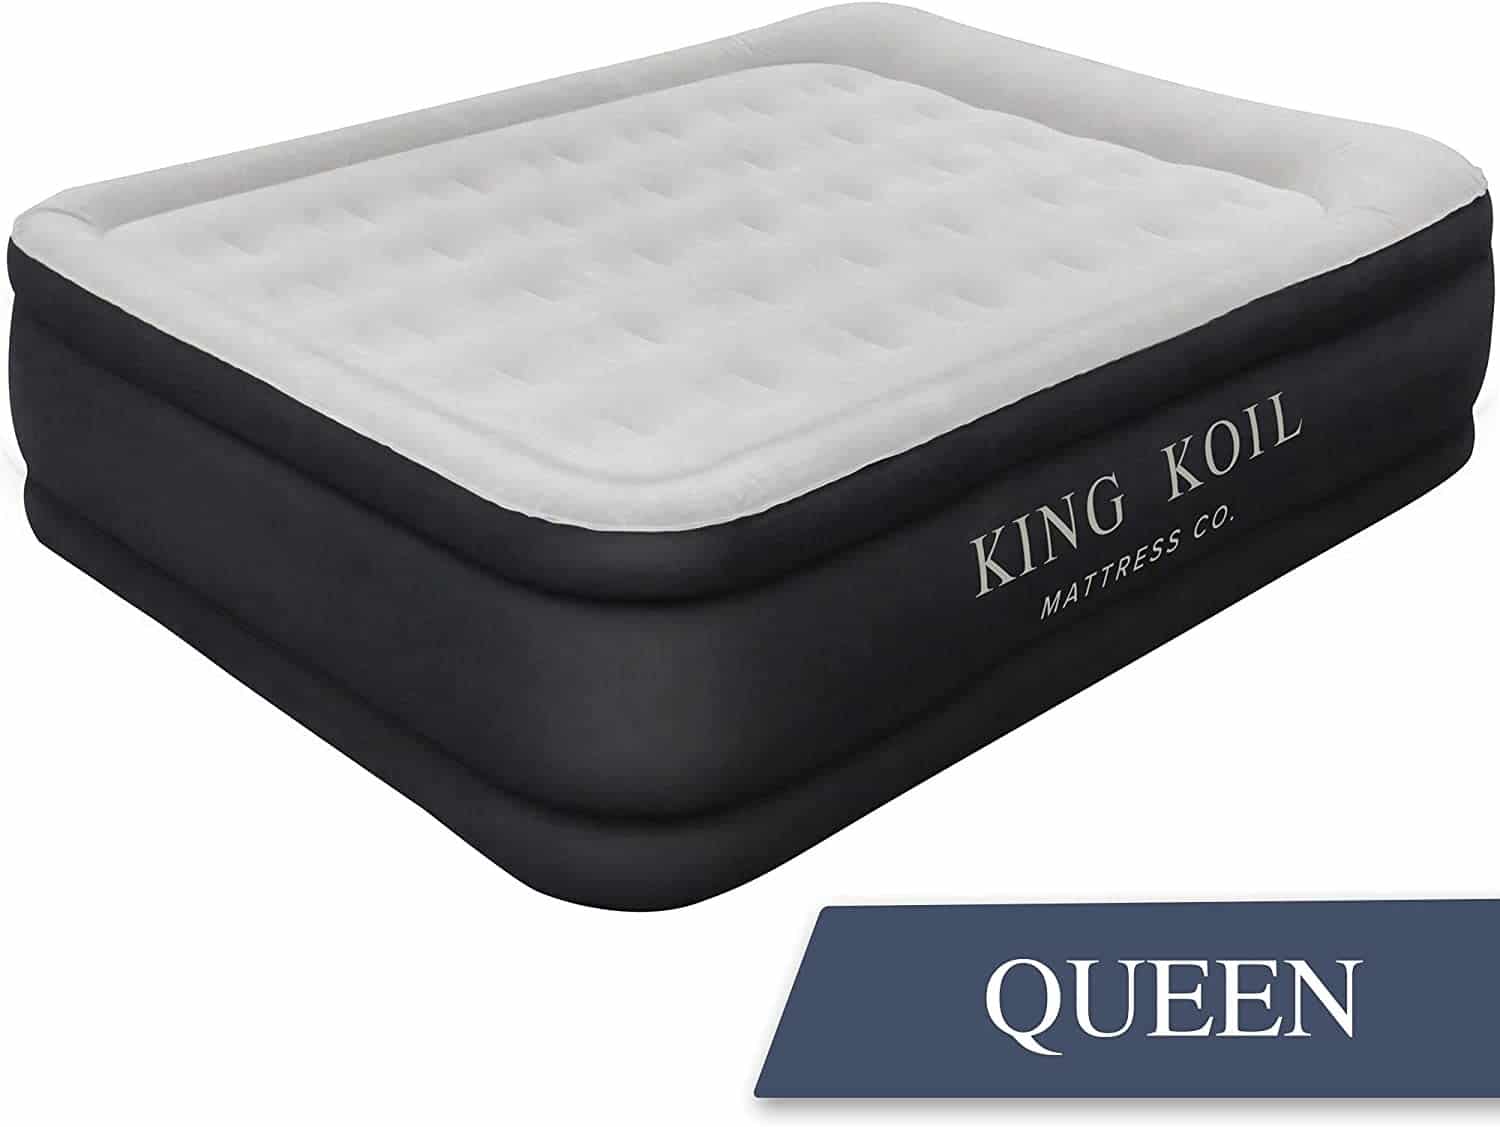 king koil luxury air mattress